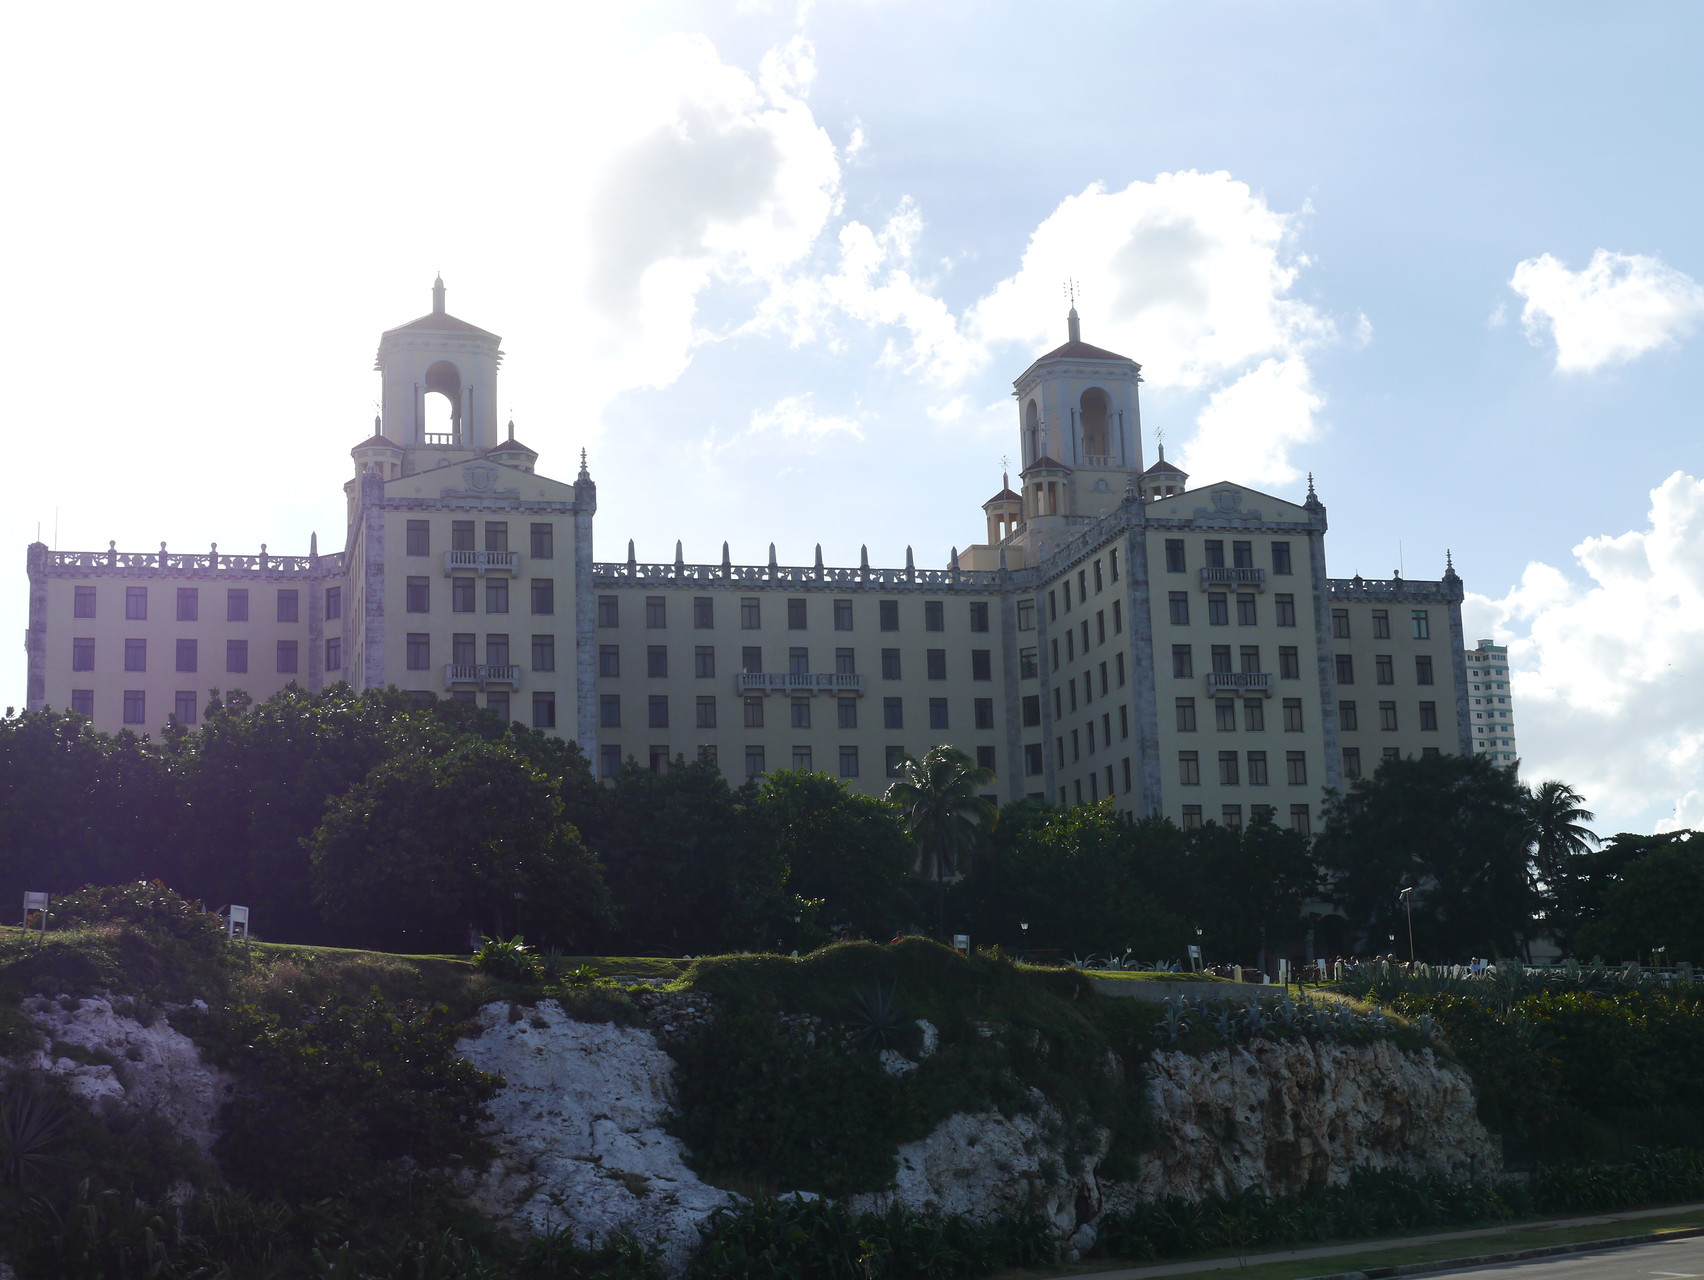 Hotel Nacional 